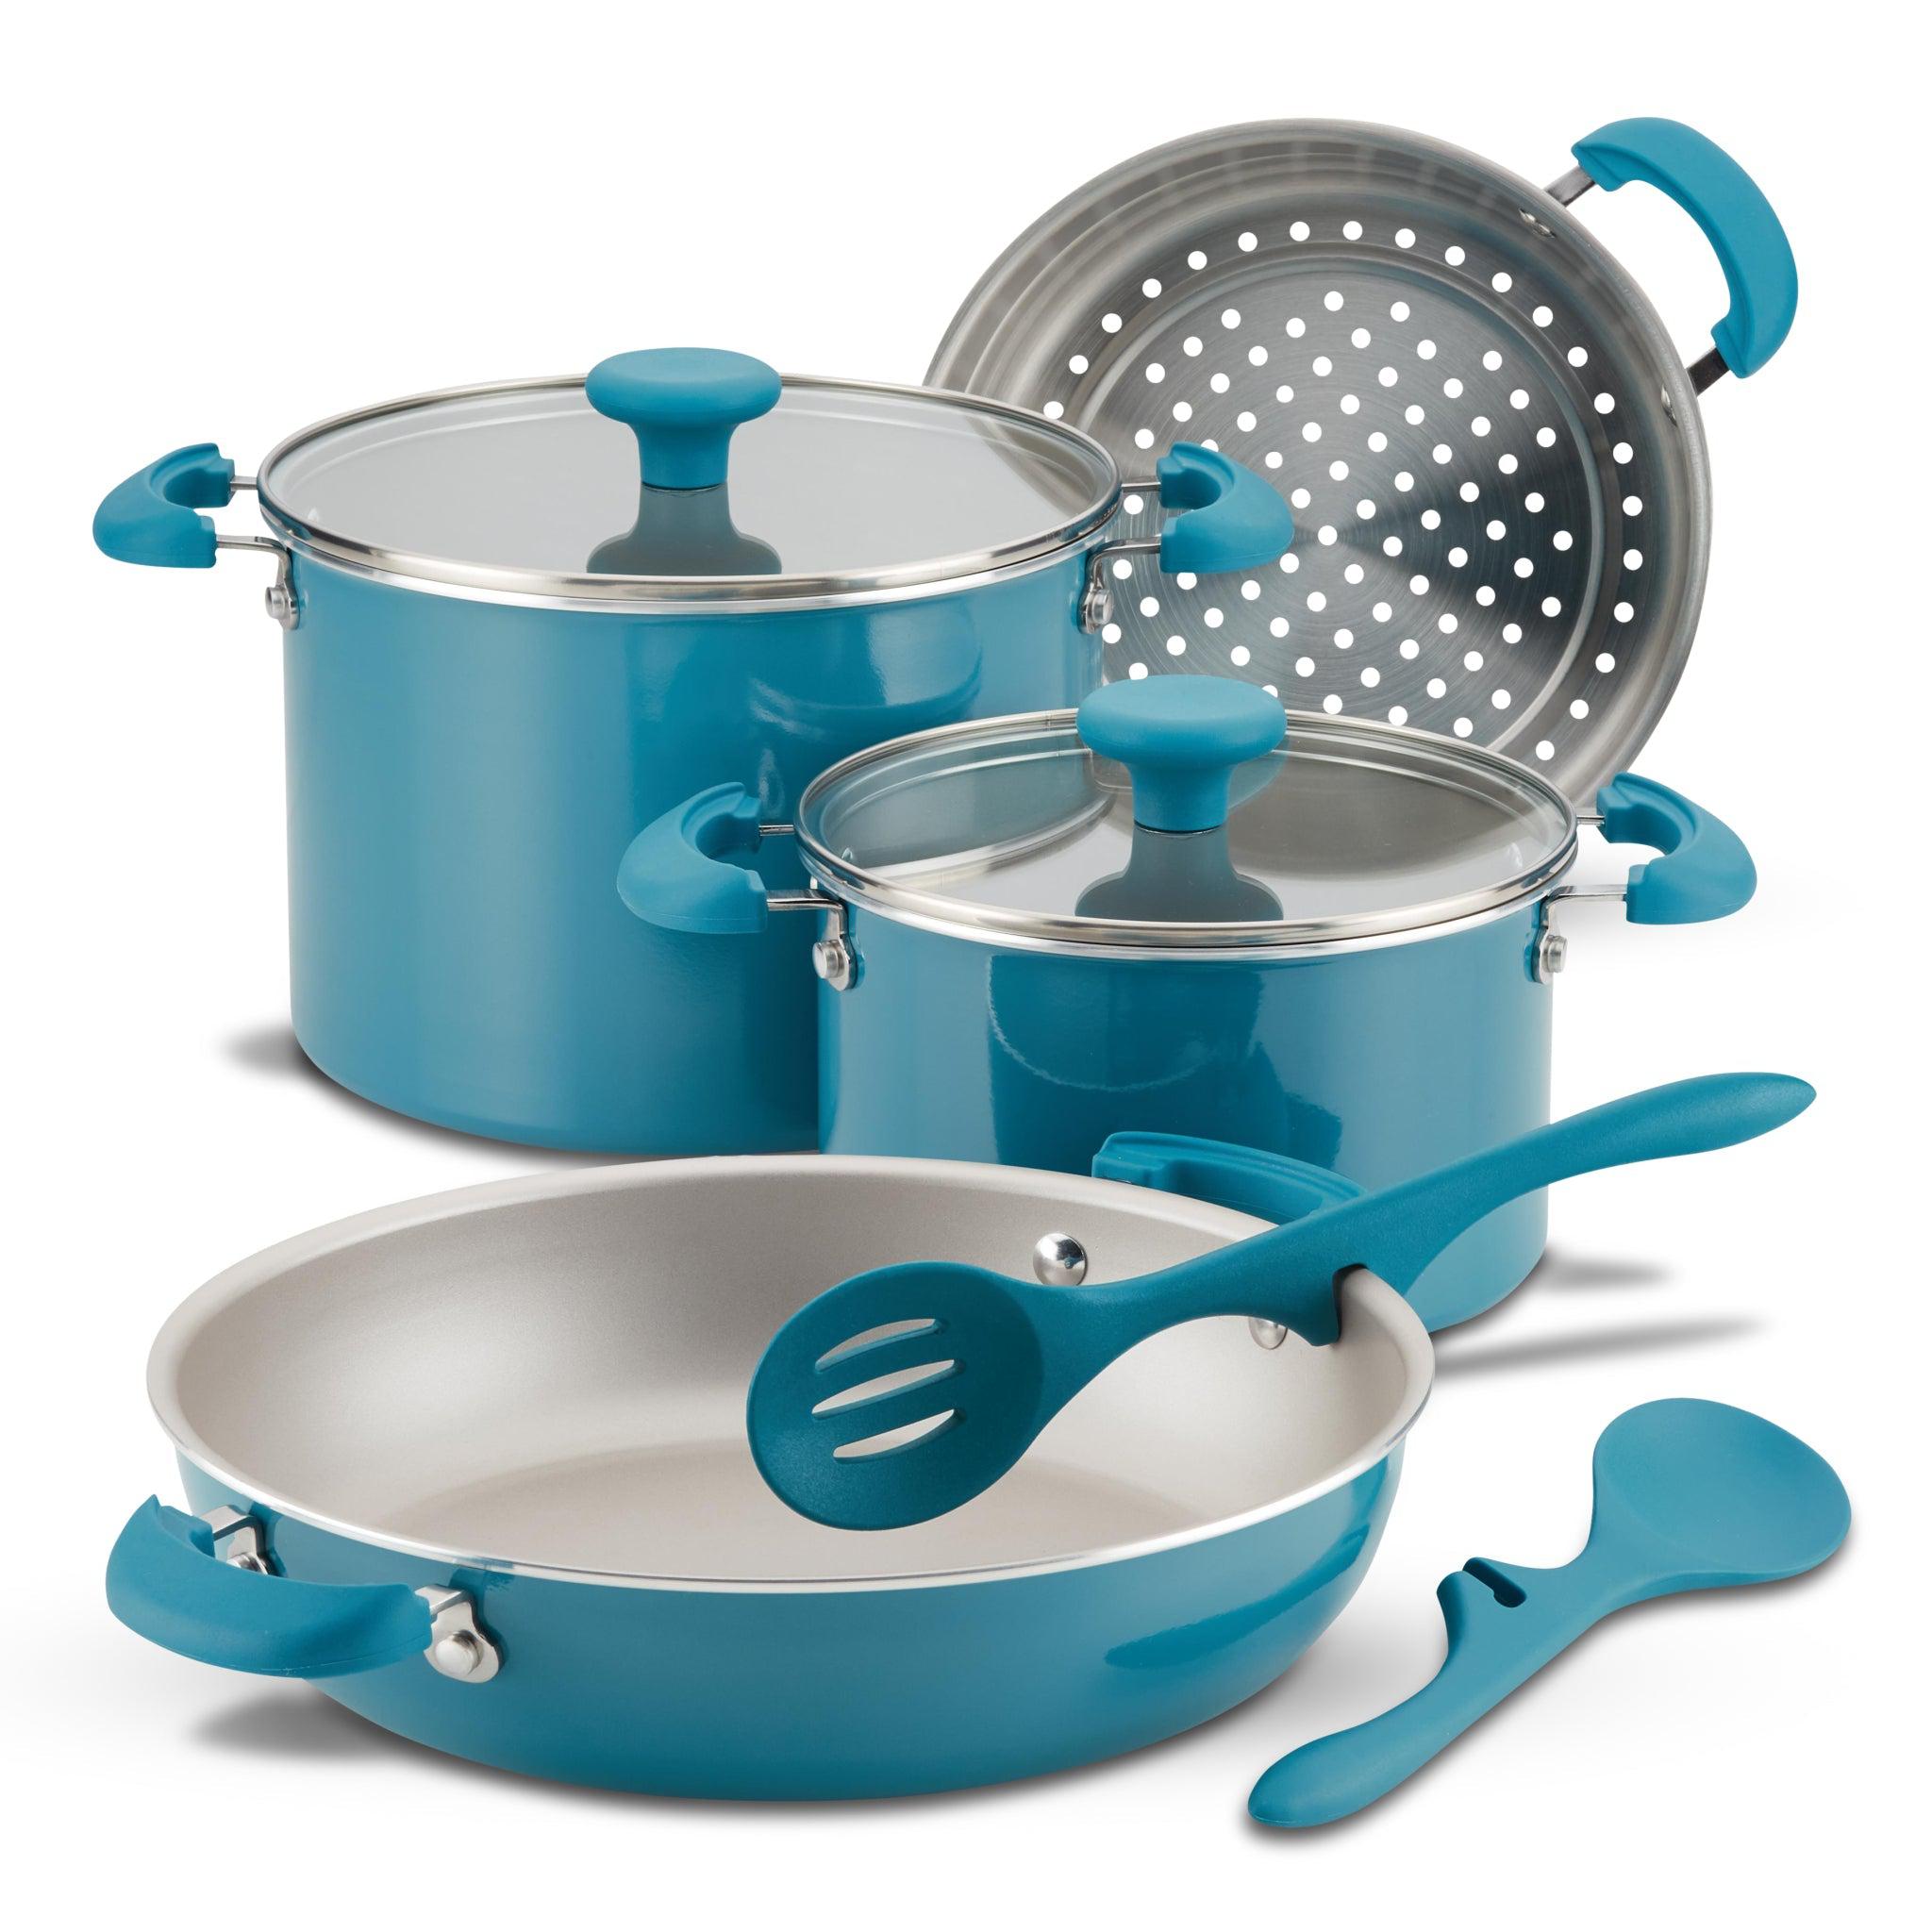 Kitchen & Table by H-E-B Non-Stick Cookware Set - Ocean Blue